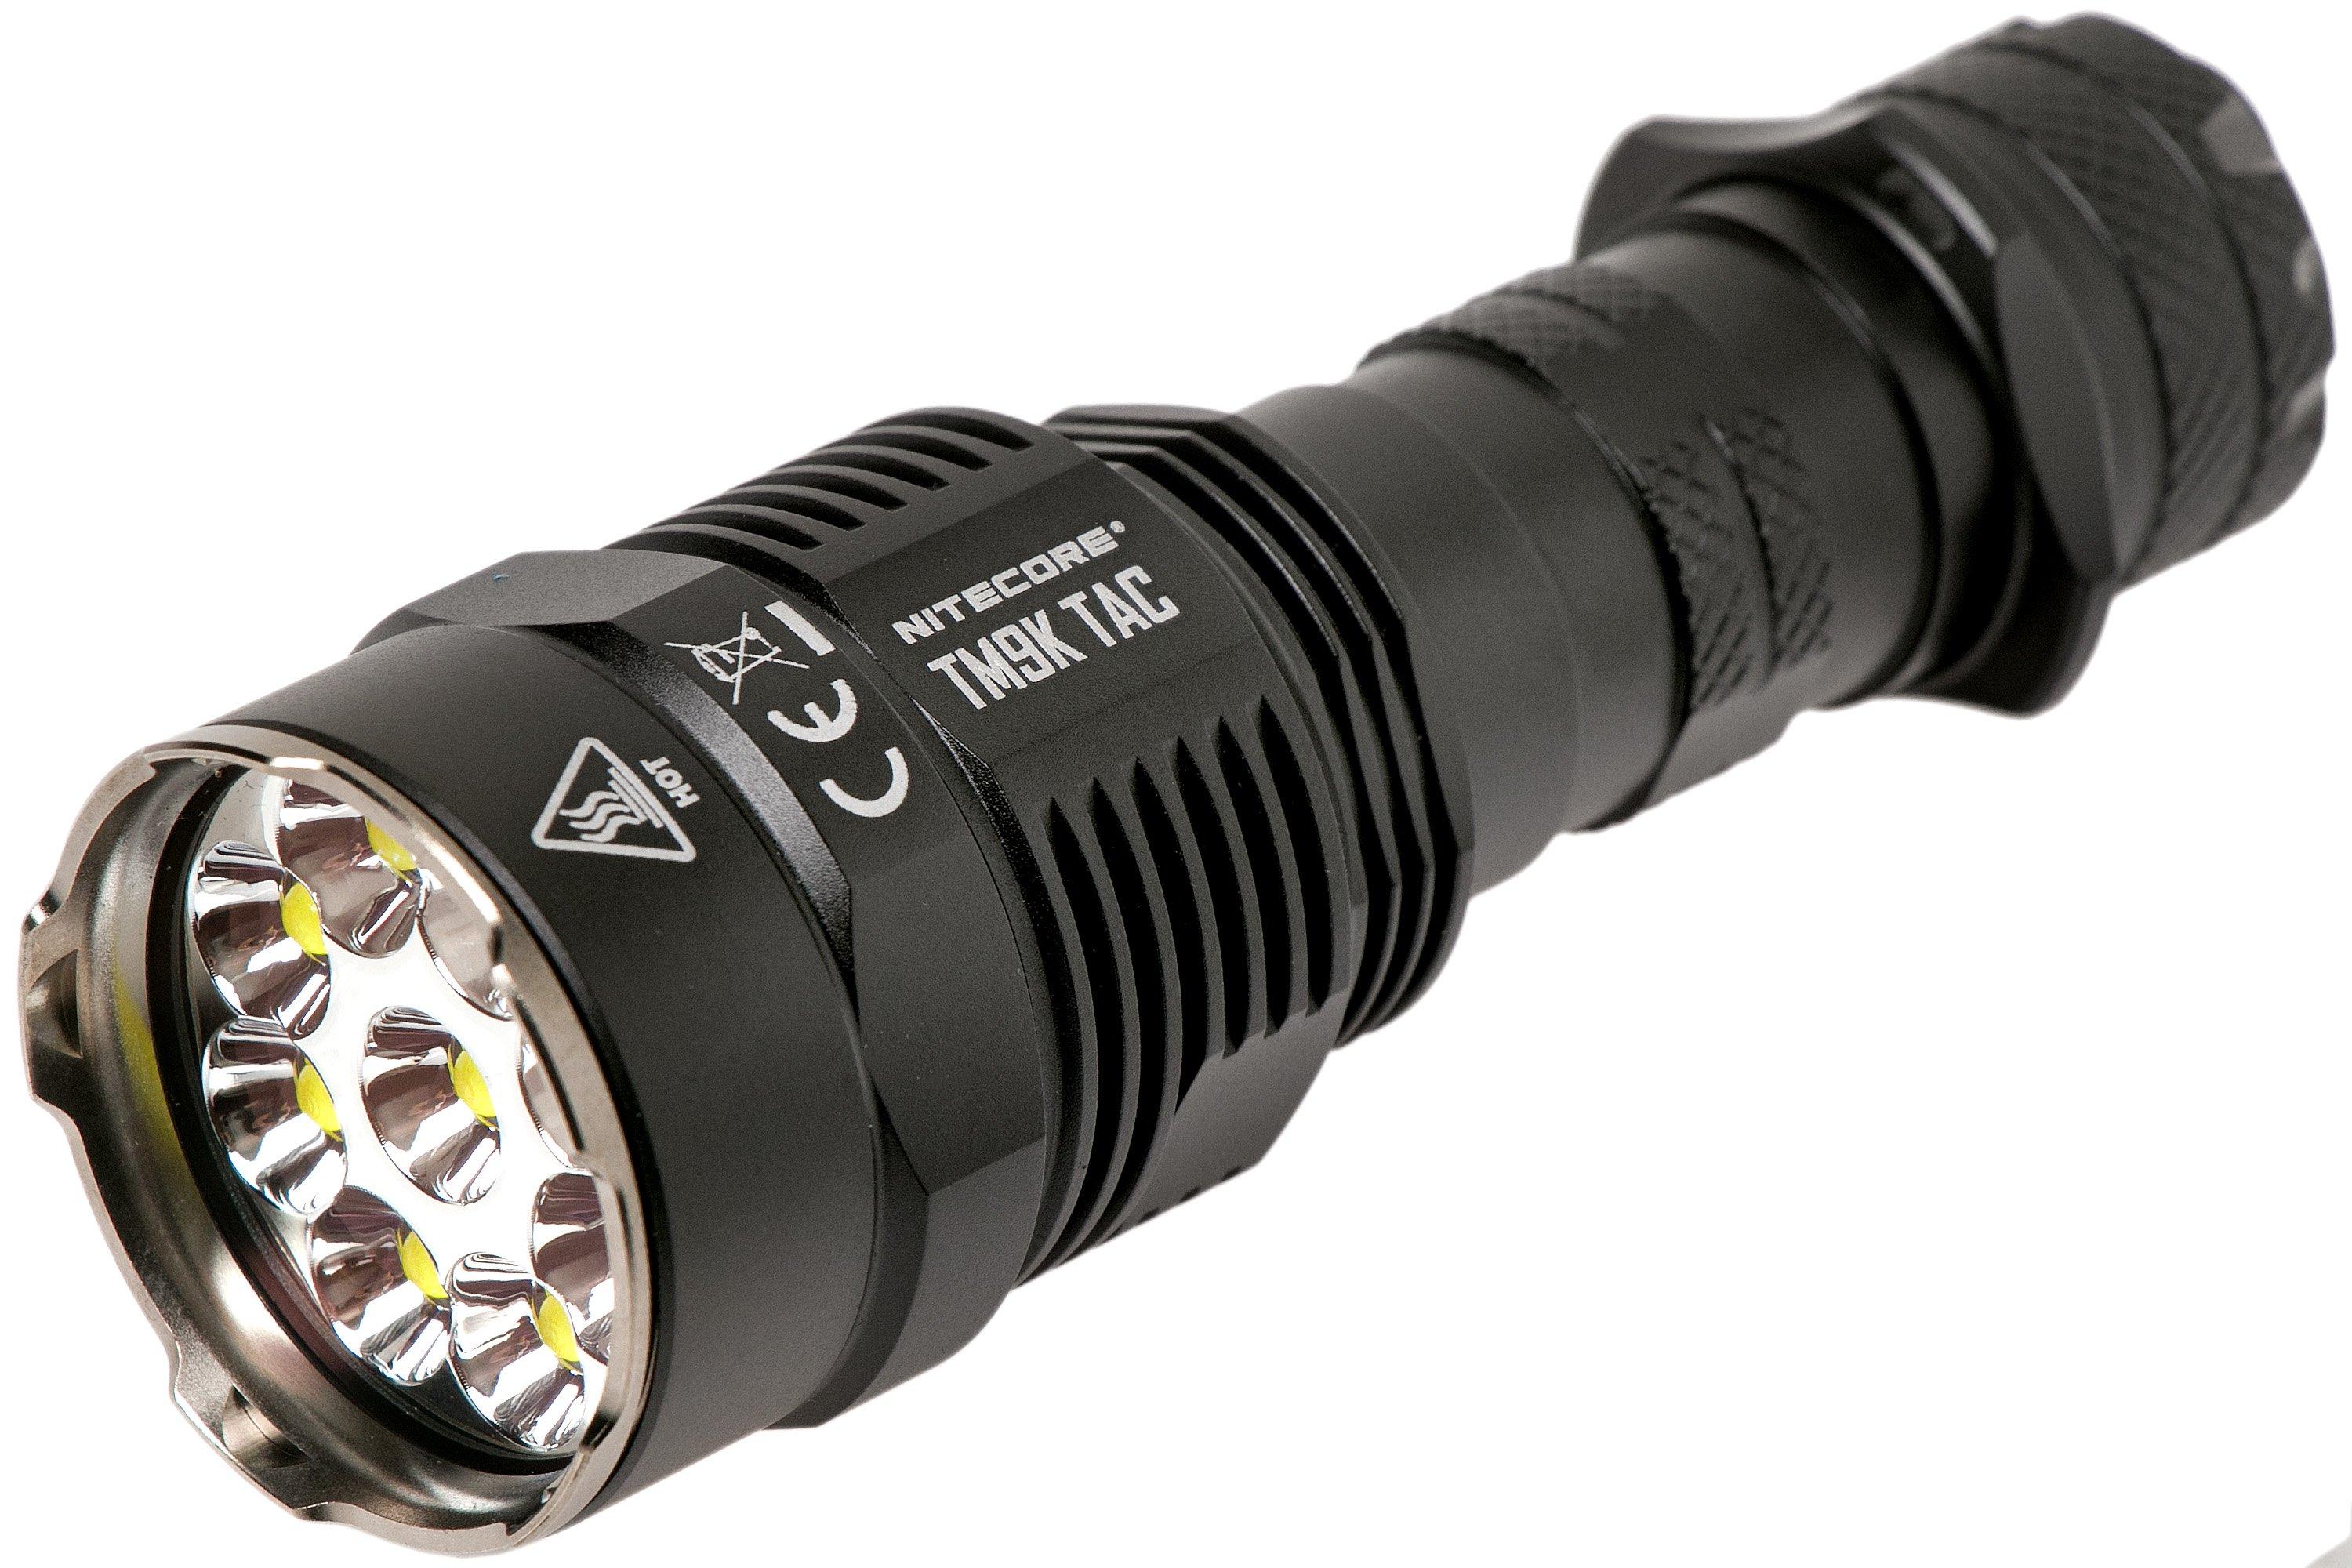 Nitecore TM9K TAC 9800 lumens lampe torche tactique ultra